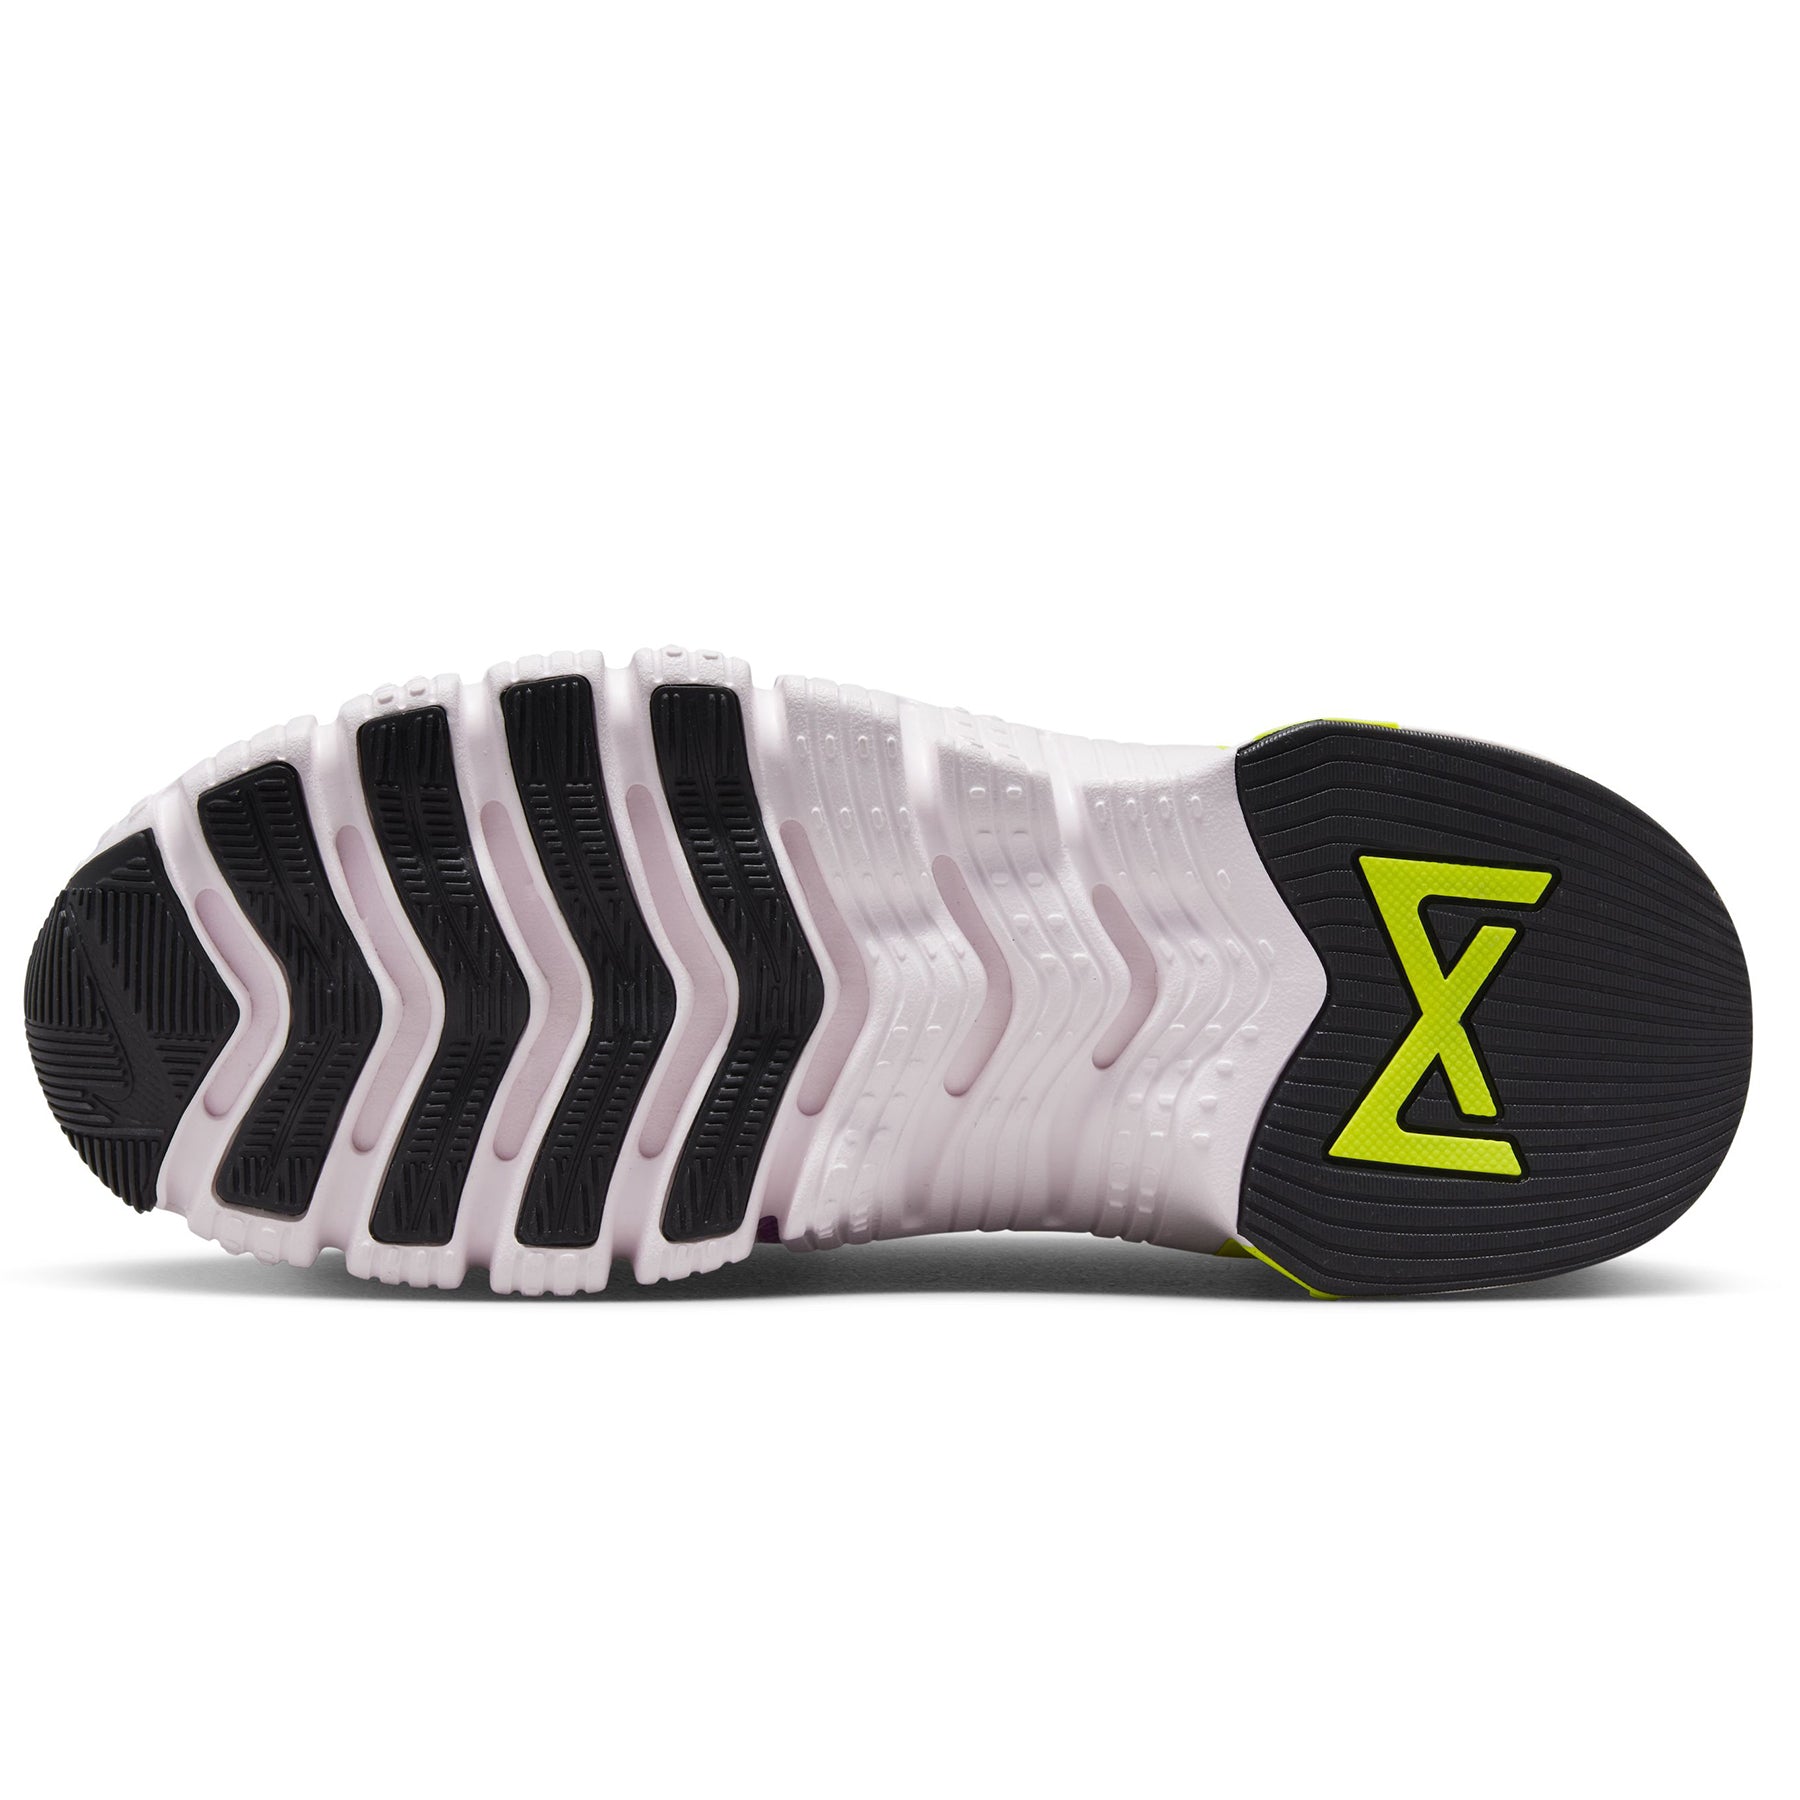 Zapatillas Nike Mujer Training Free Metcon 4 | CZ0596-501